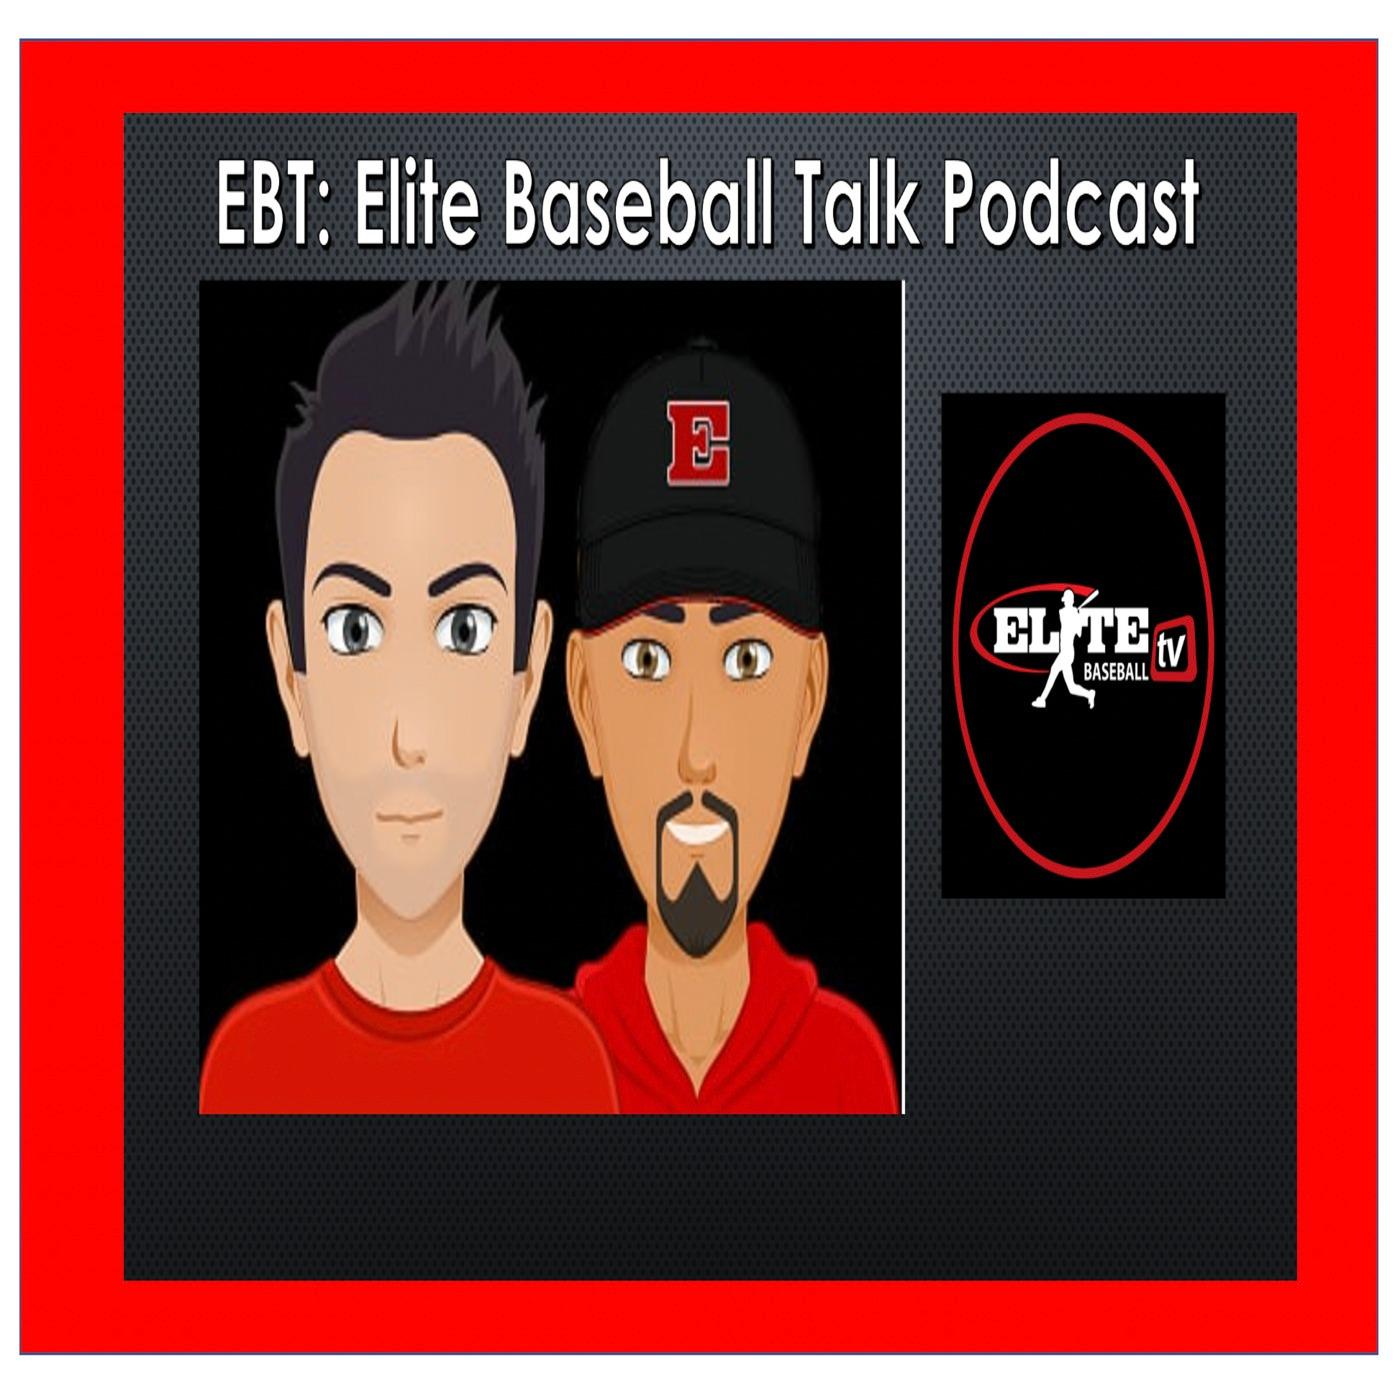 Elite Baseball Talk